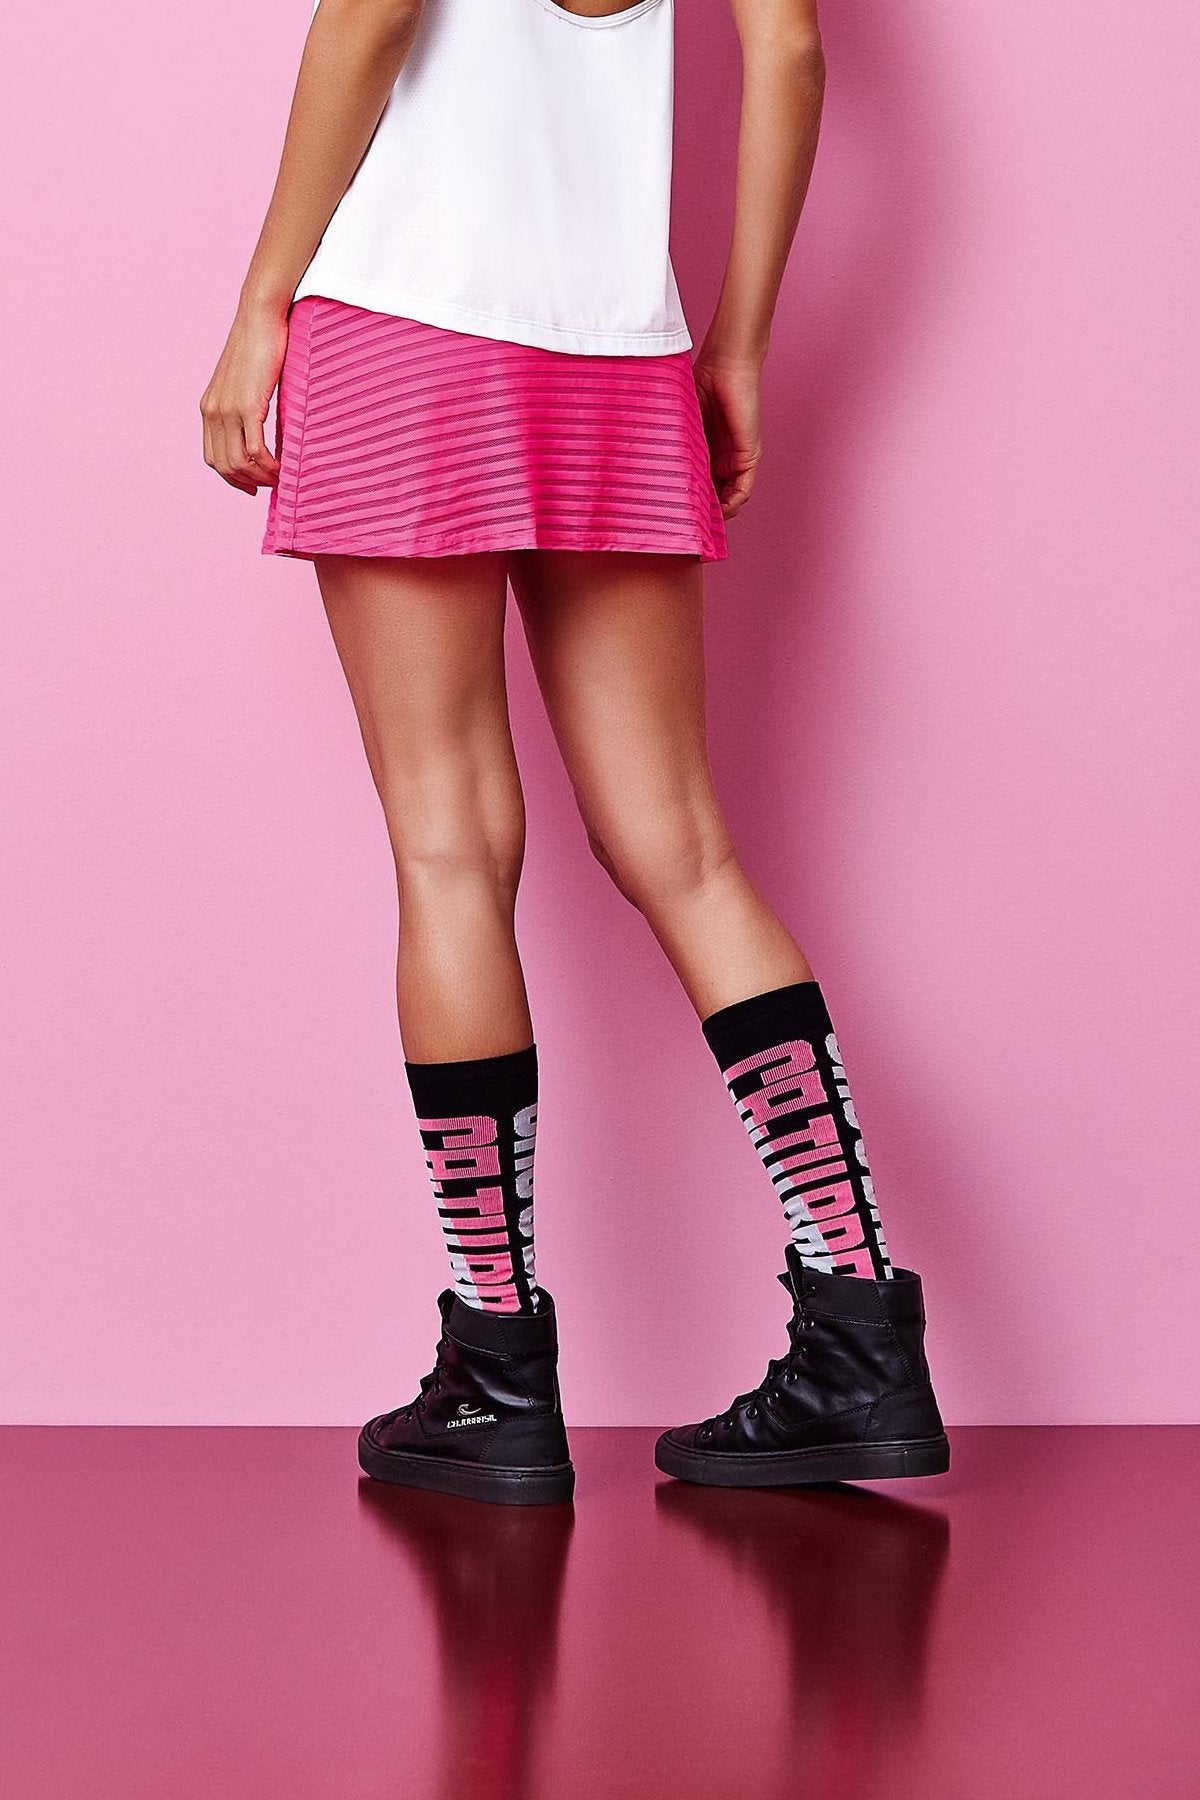 CajuBrasil USA Brazilian Fitness Tennis skort Pink SALE Skirt Shorts